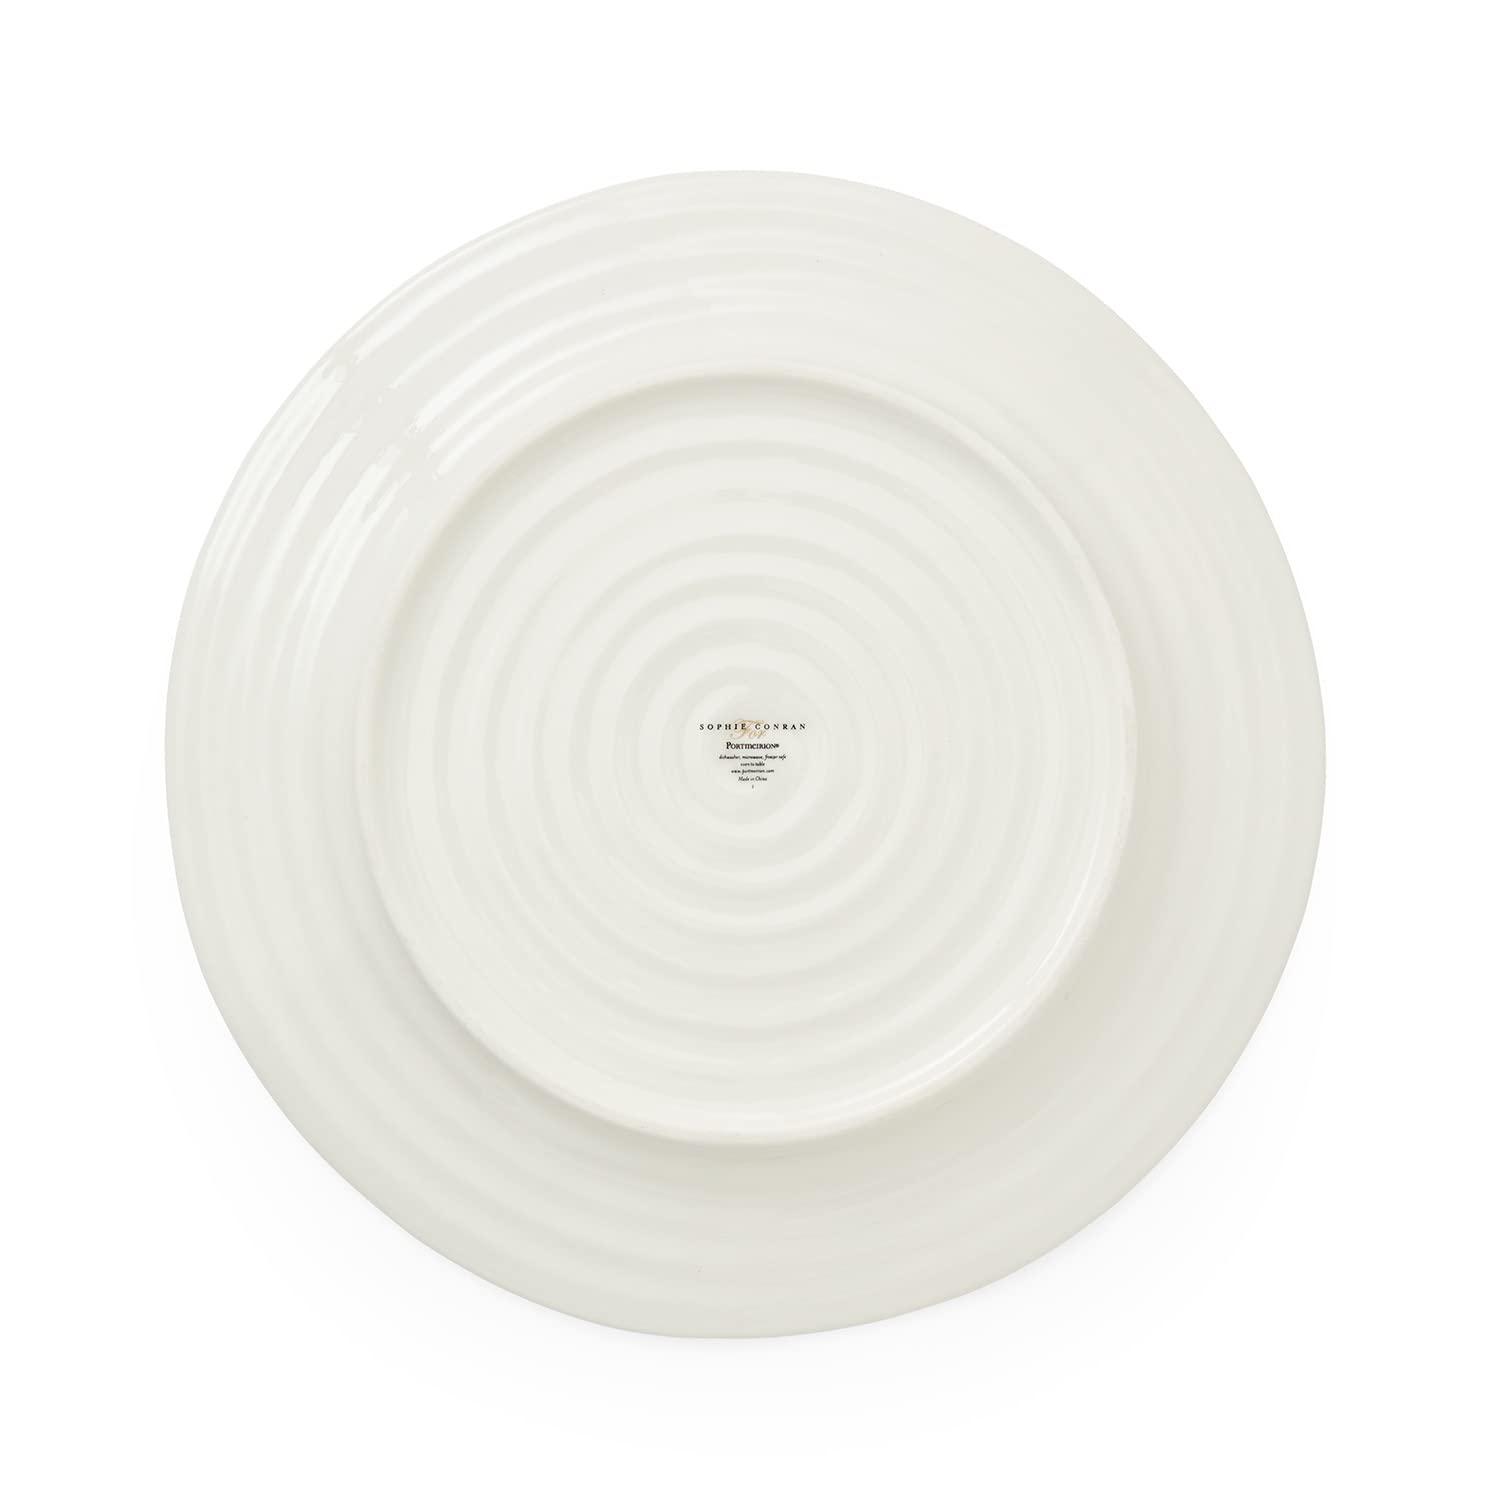 American Atelier portmeirion sophie conran lavandula salad plate, 8-inch ceramic plate, white porcelain plate for kitchen, lavender sprig bord